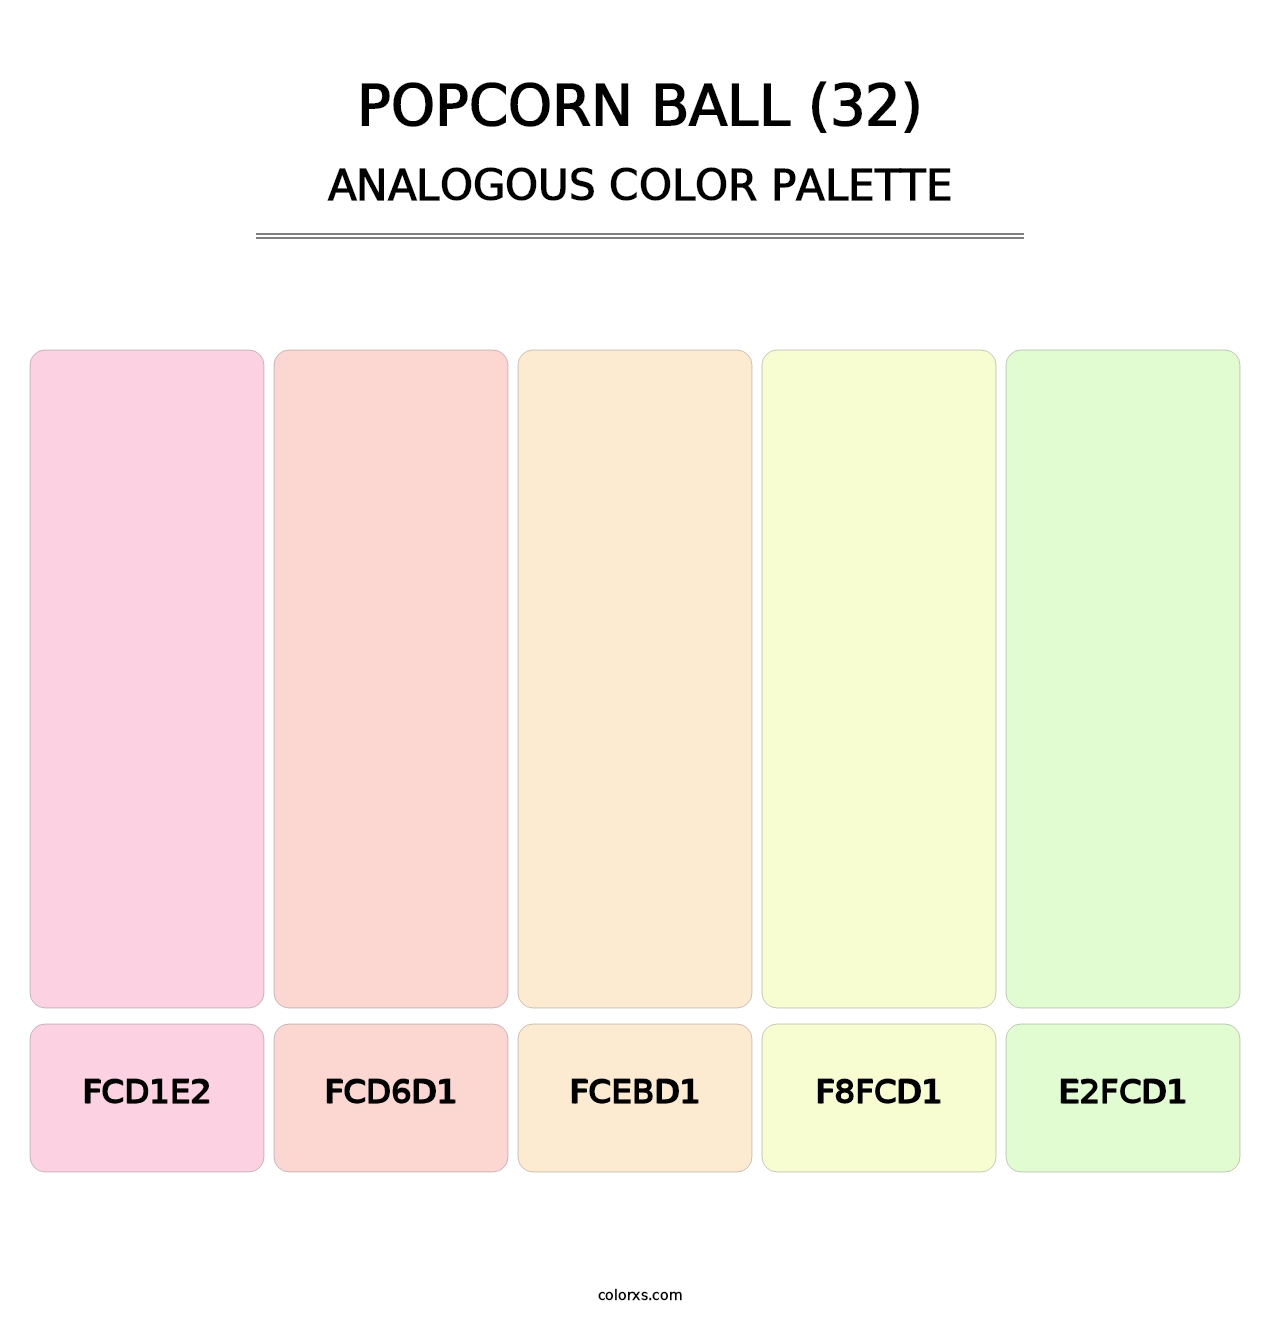 Popcorn Ball (32) - Analogous Color Palette